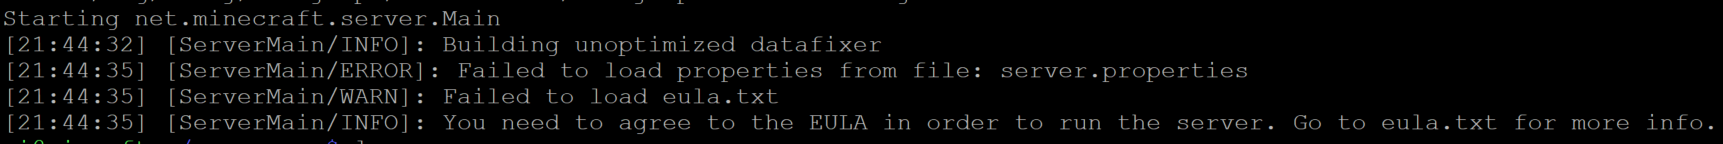 error message requesting EULA